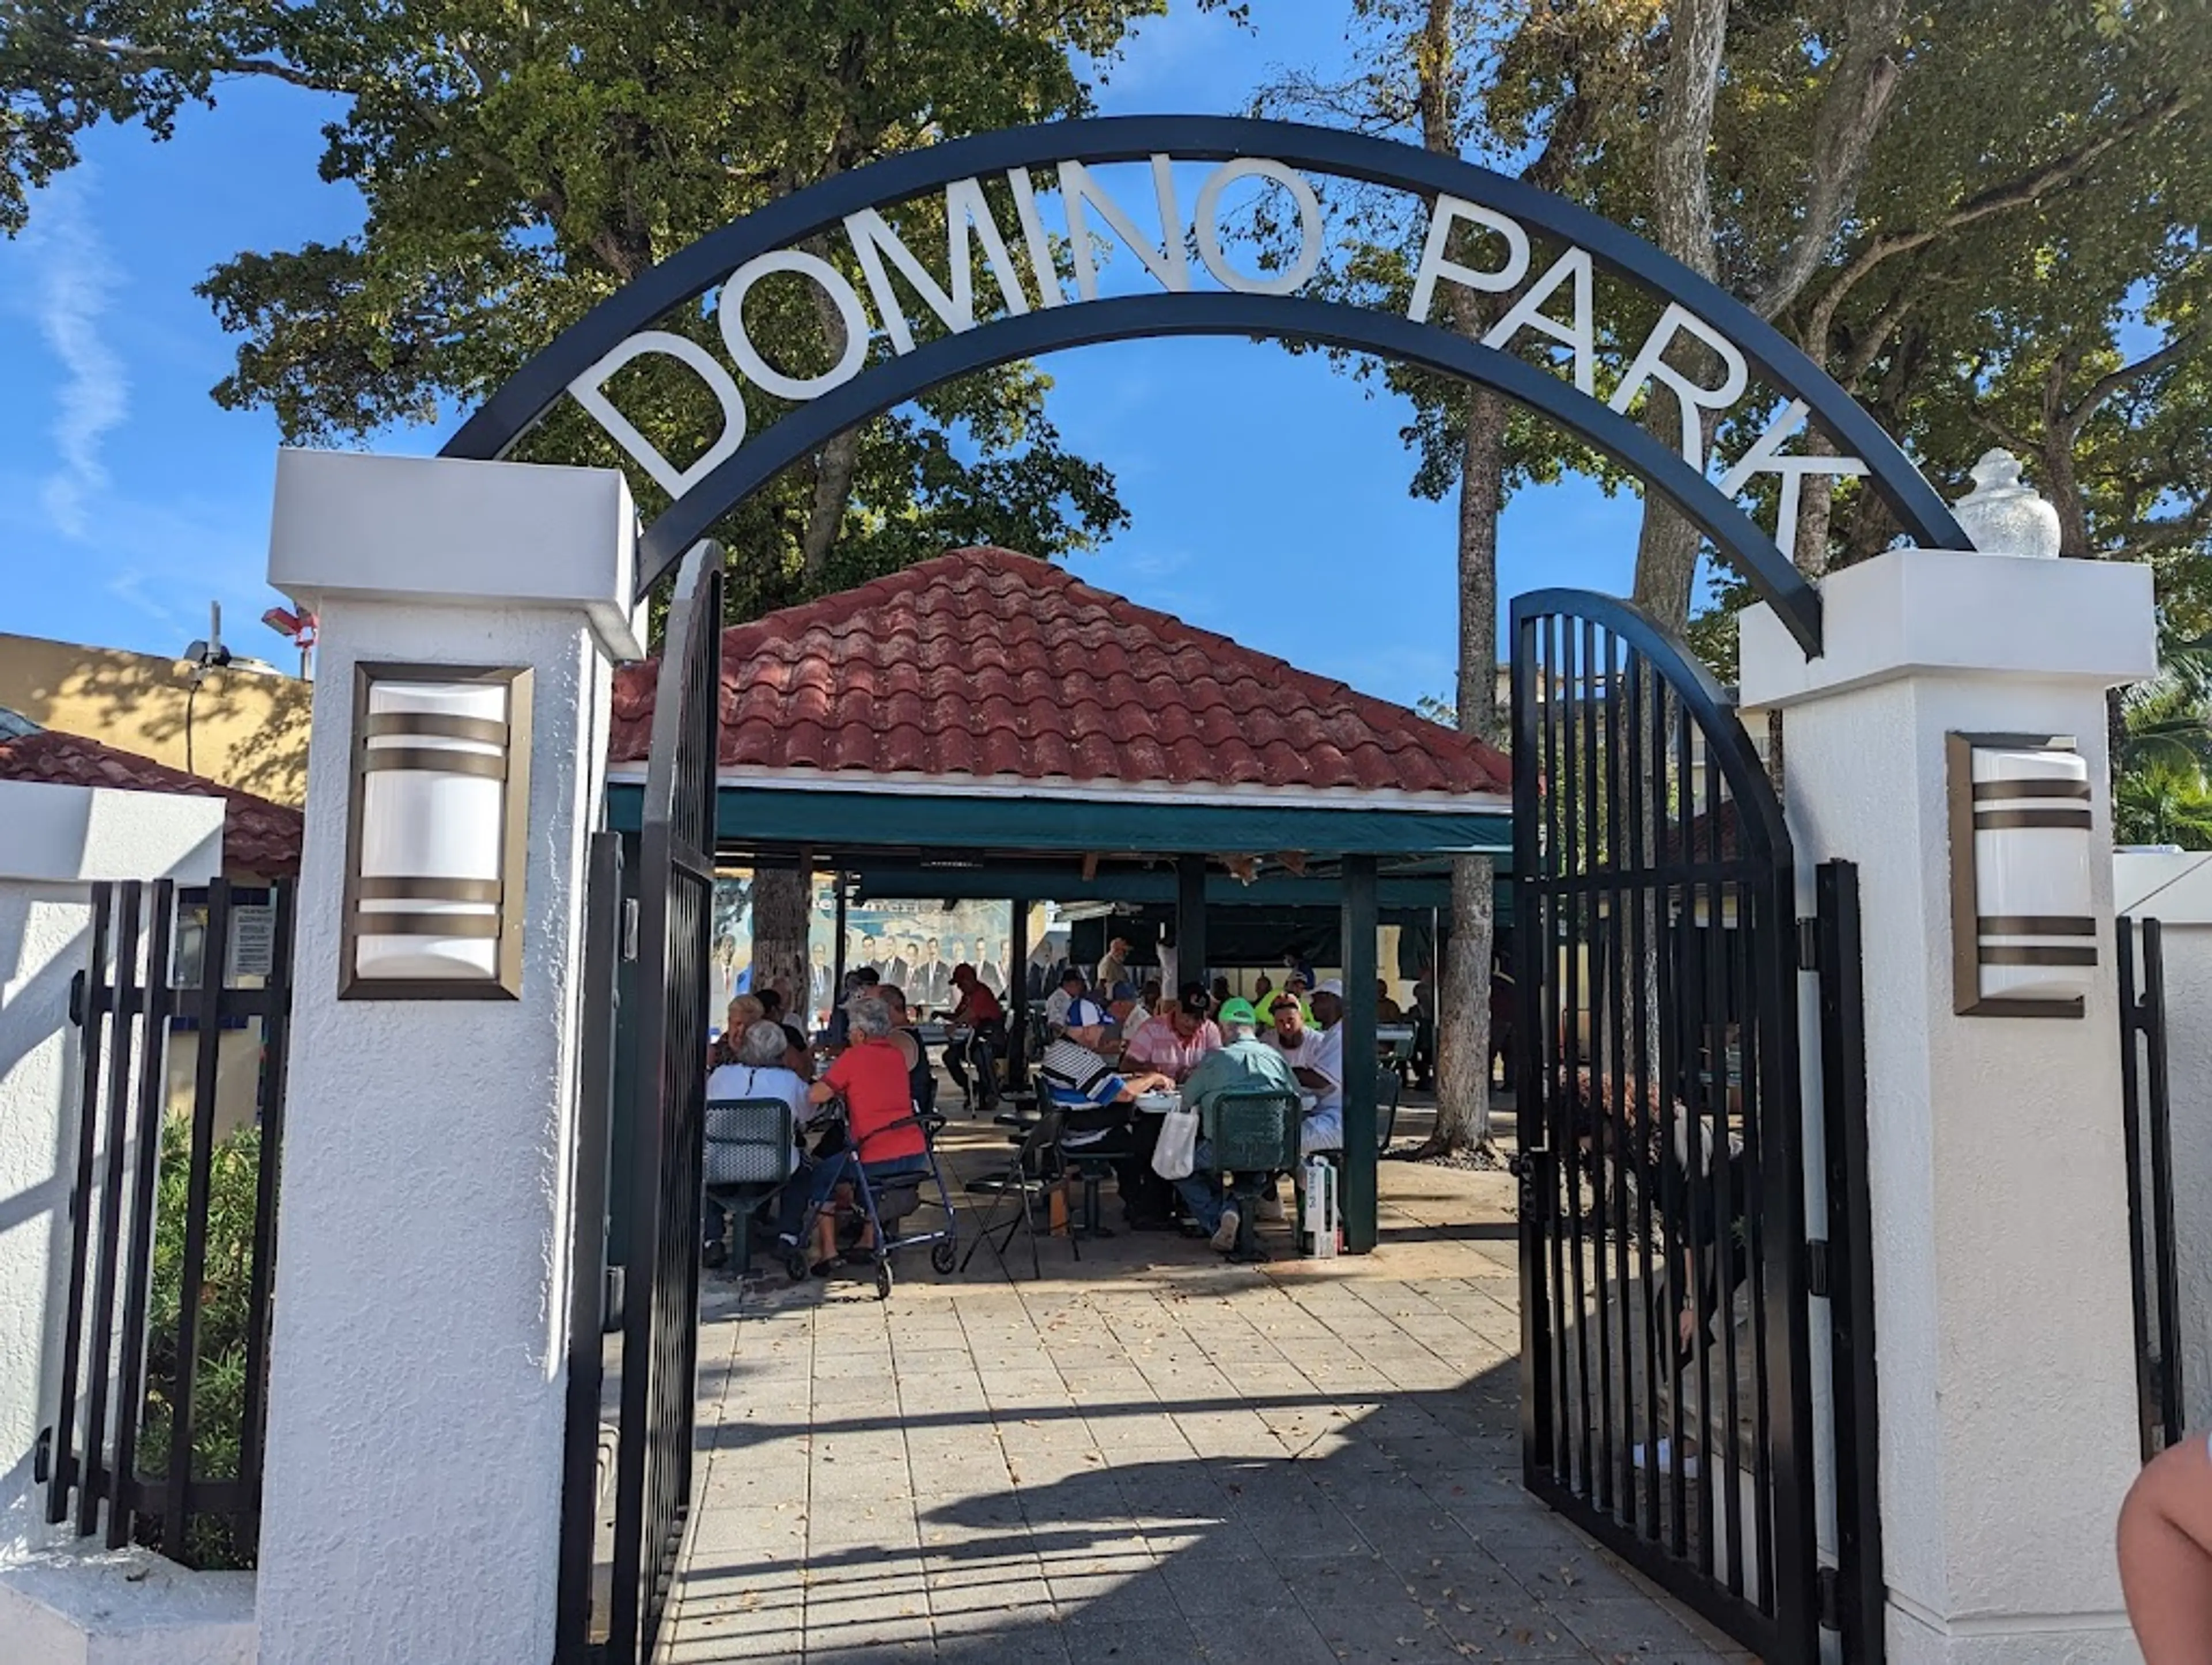 Domino Park